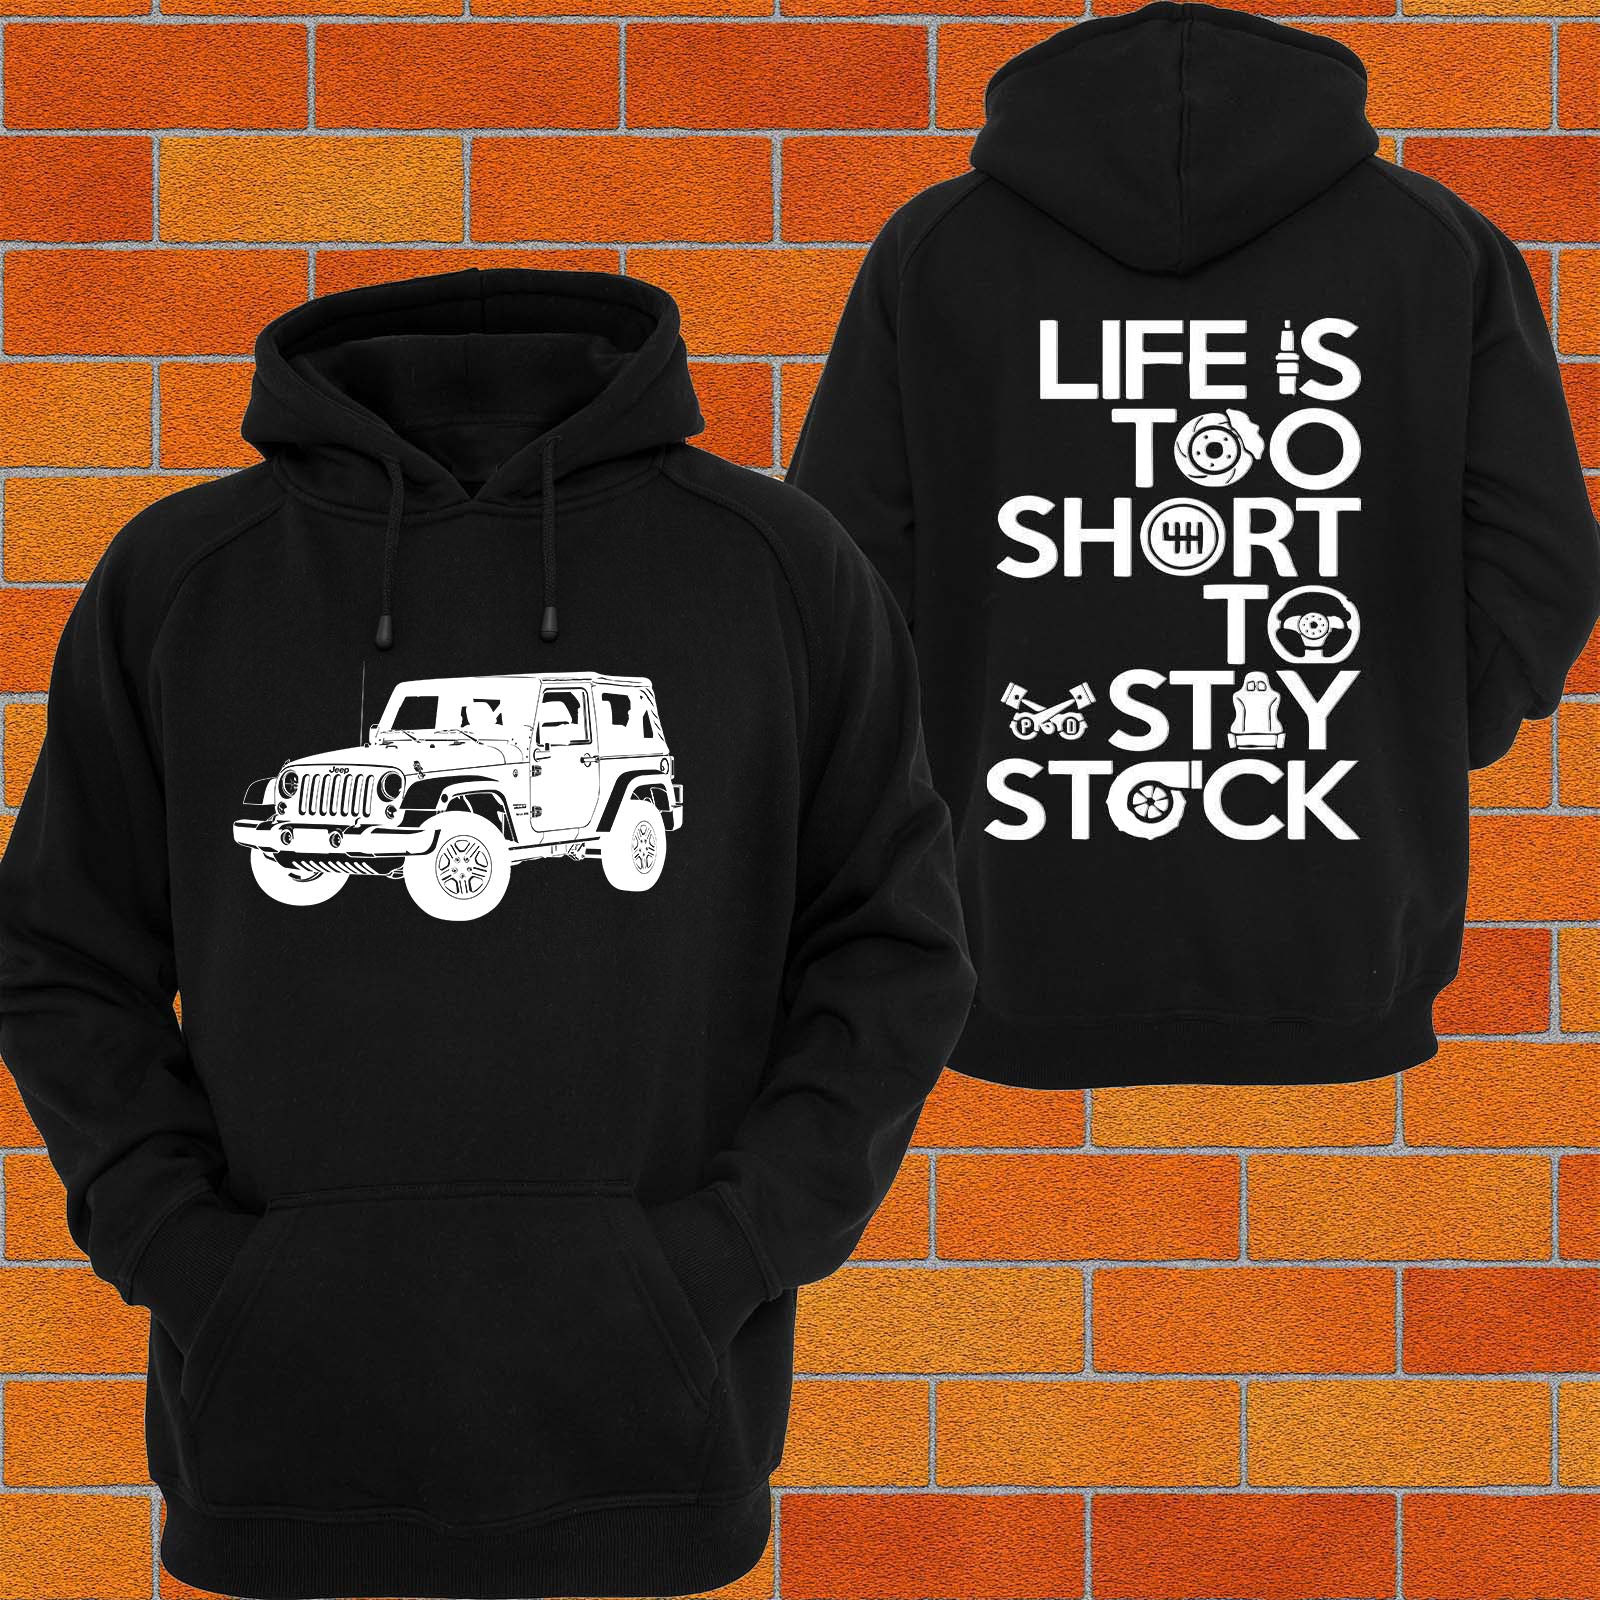 jeep rubicon sweatshirt